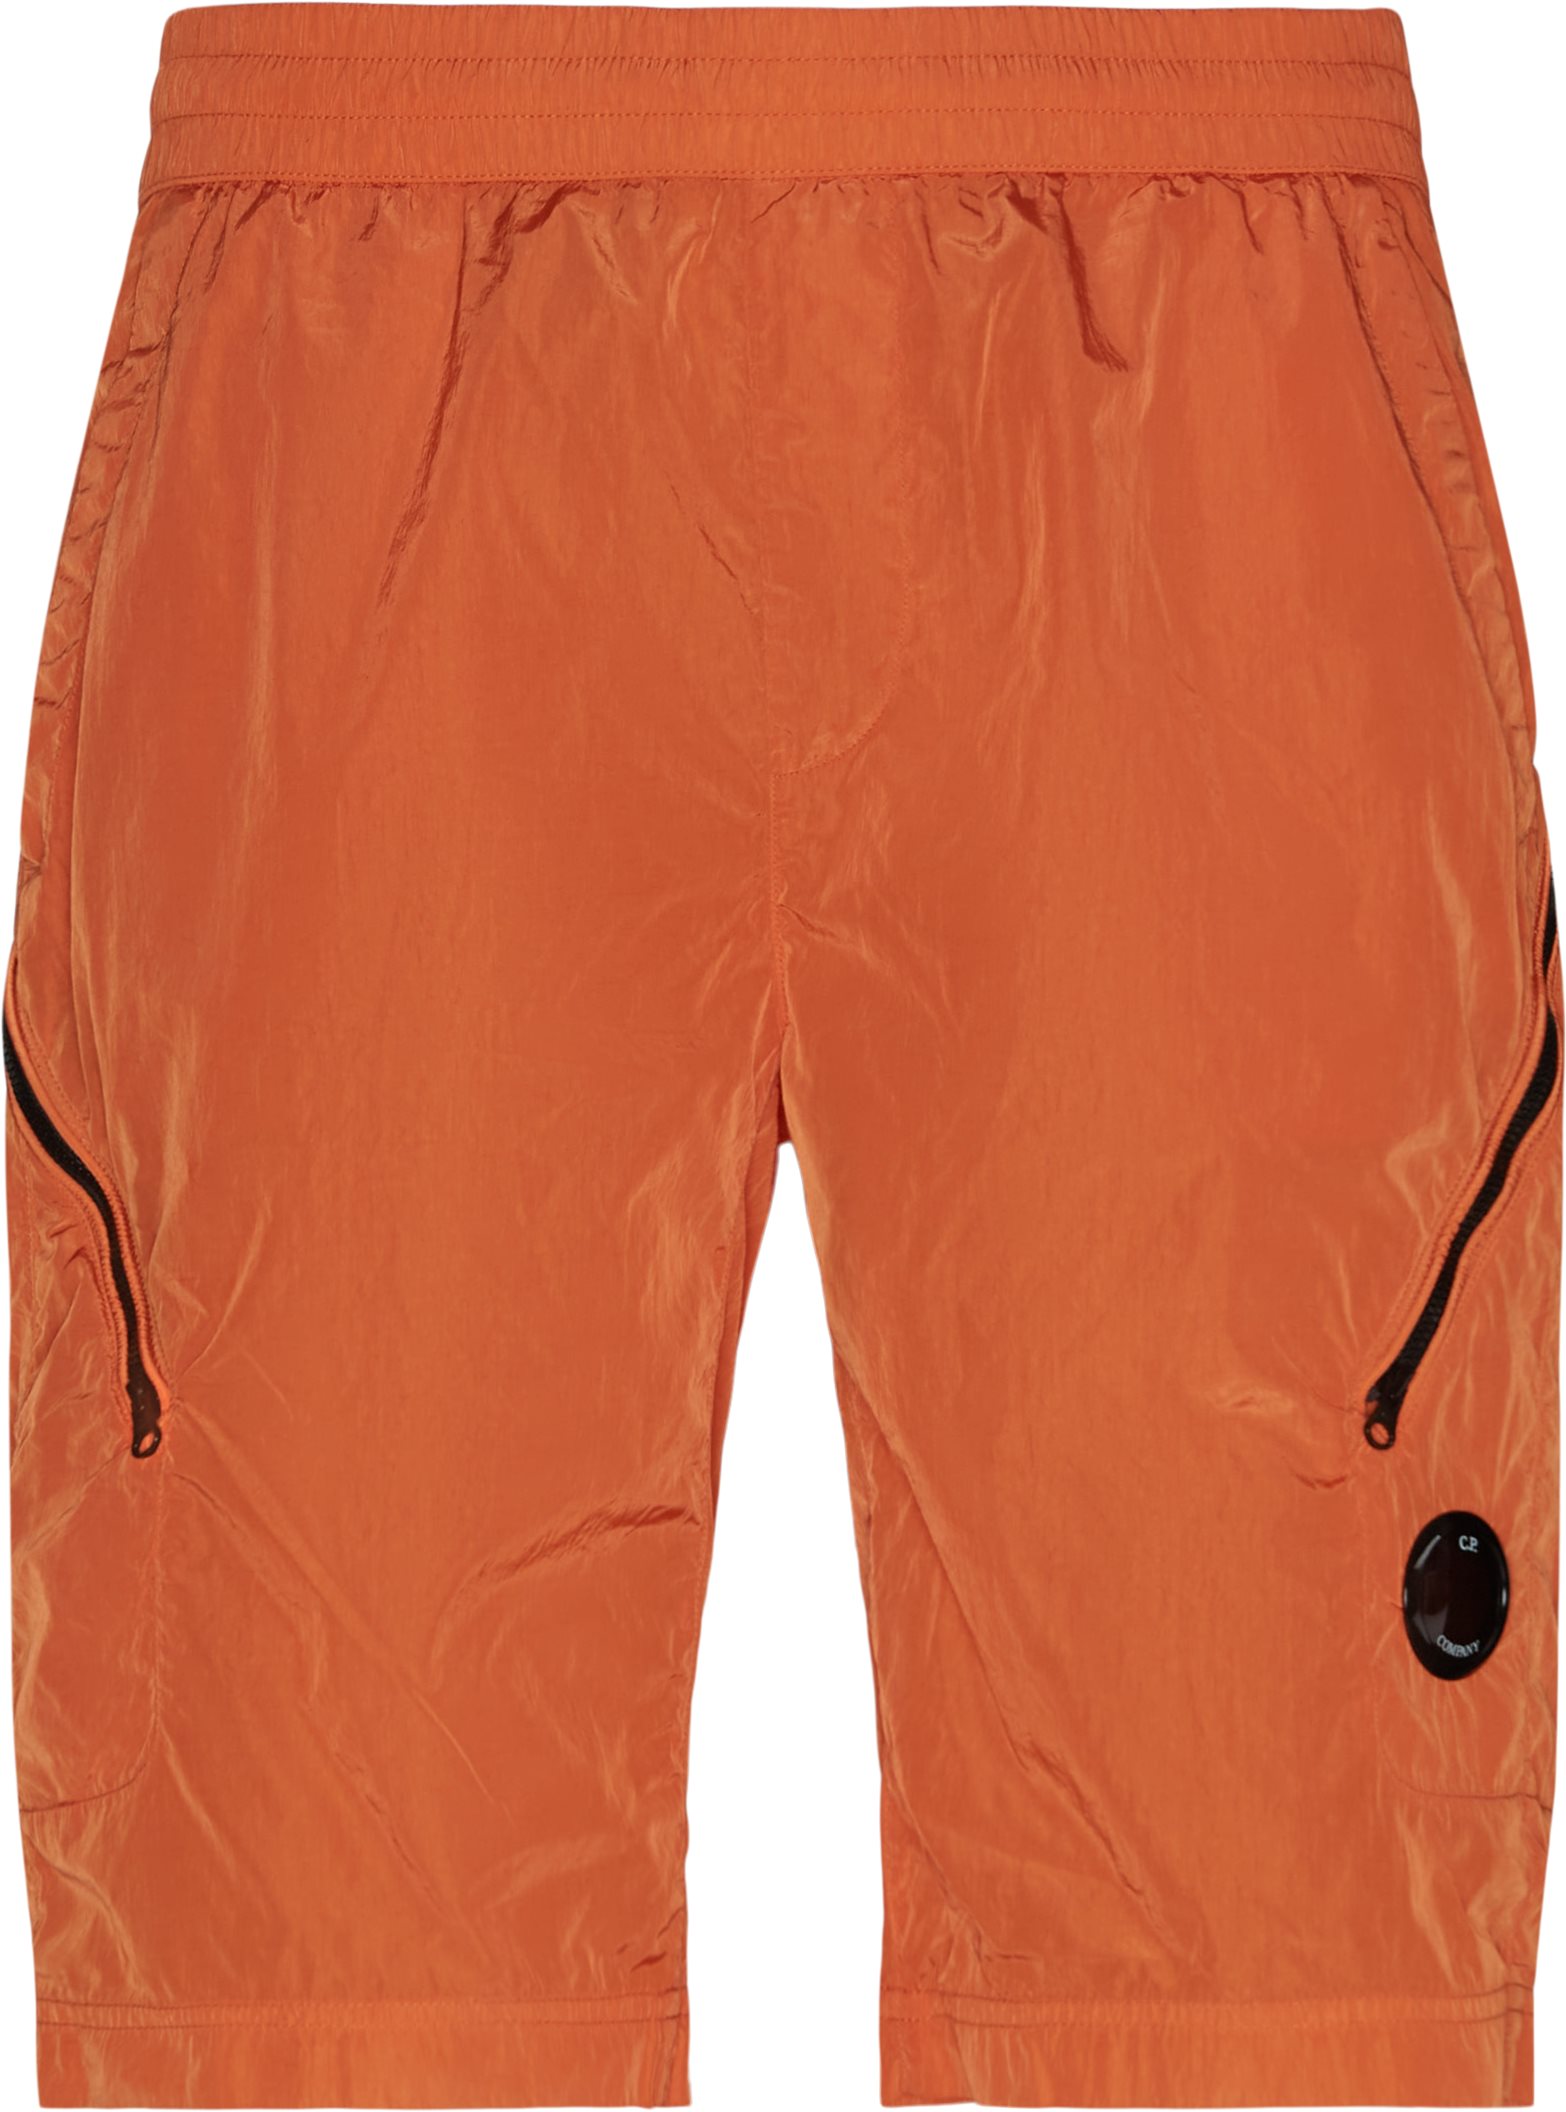 Long Shorts - Shorts - Regular fit - Orange